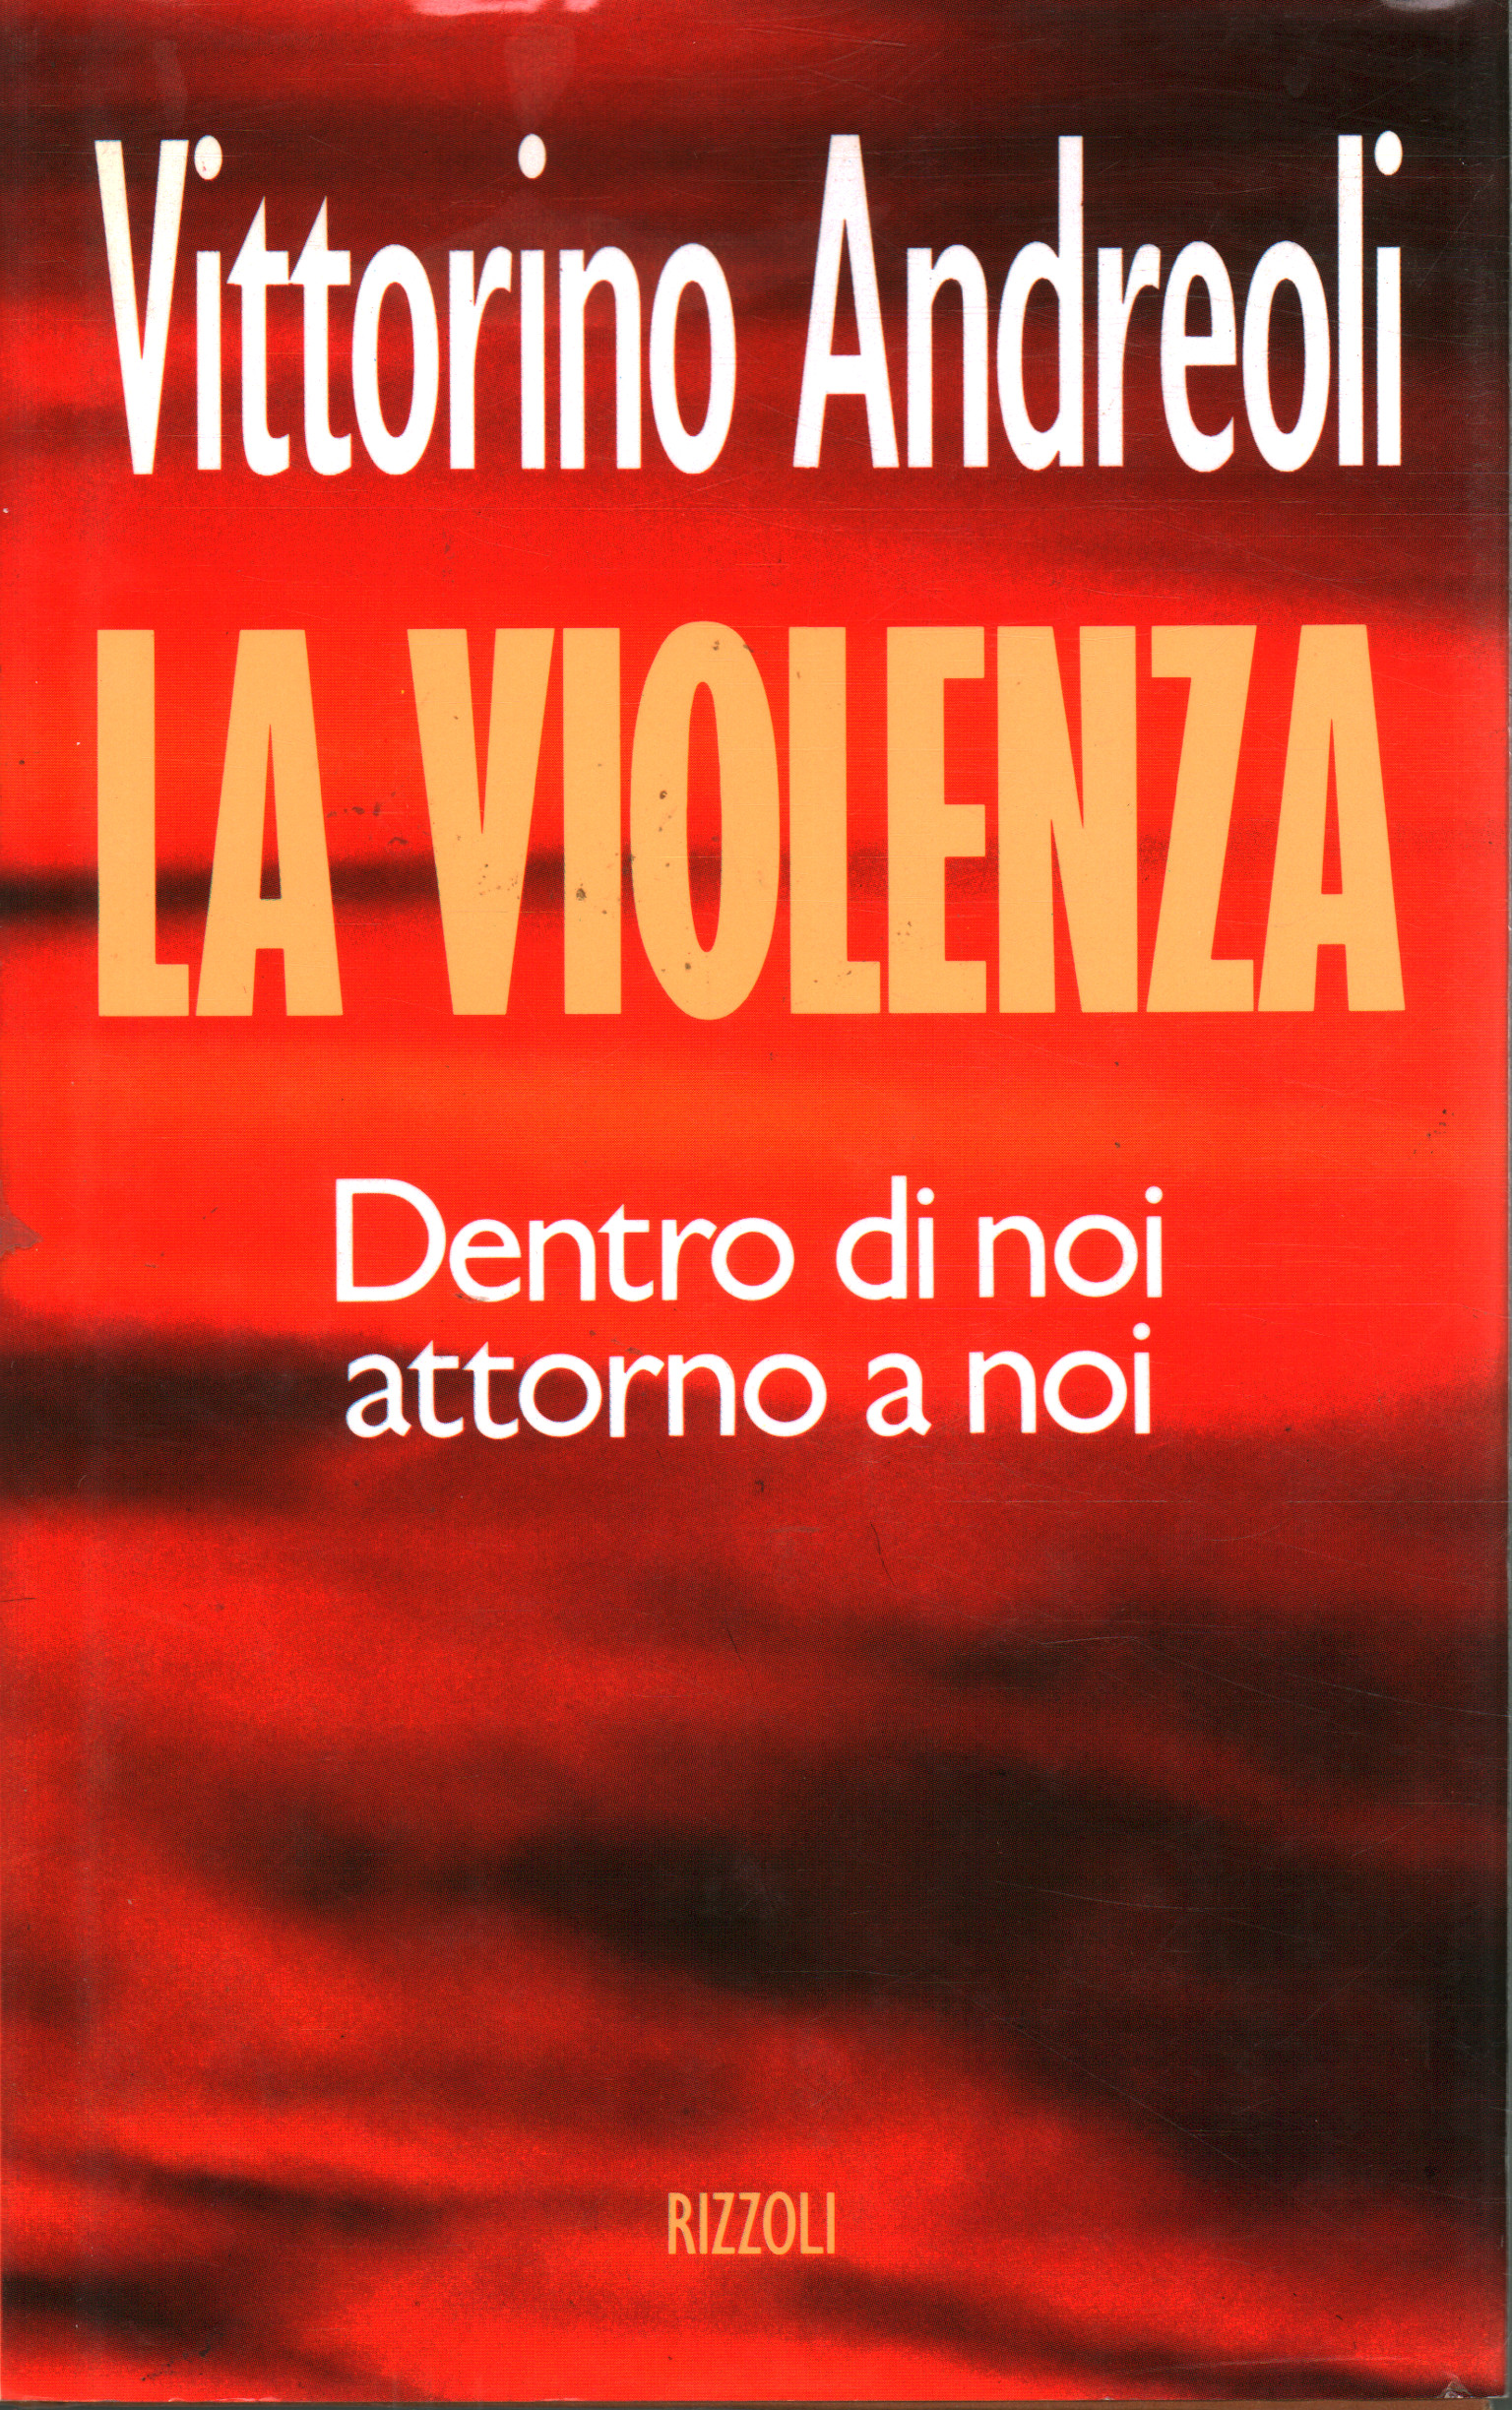 Violences, Vittorino Andreoli